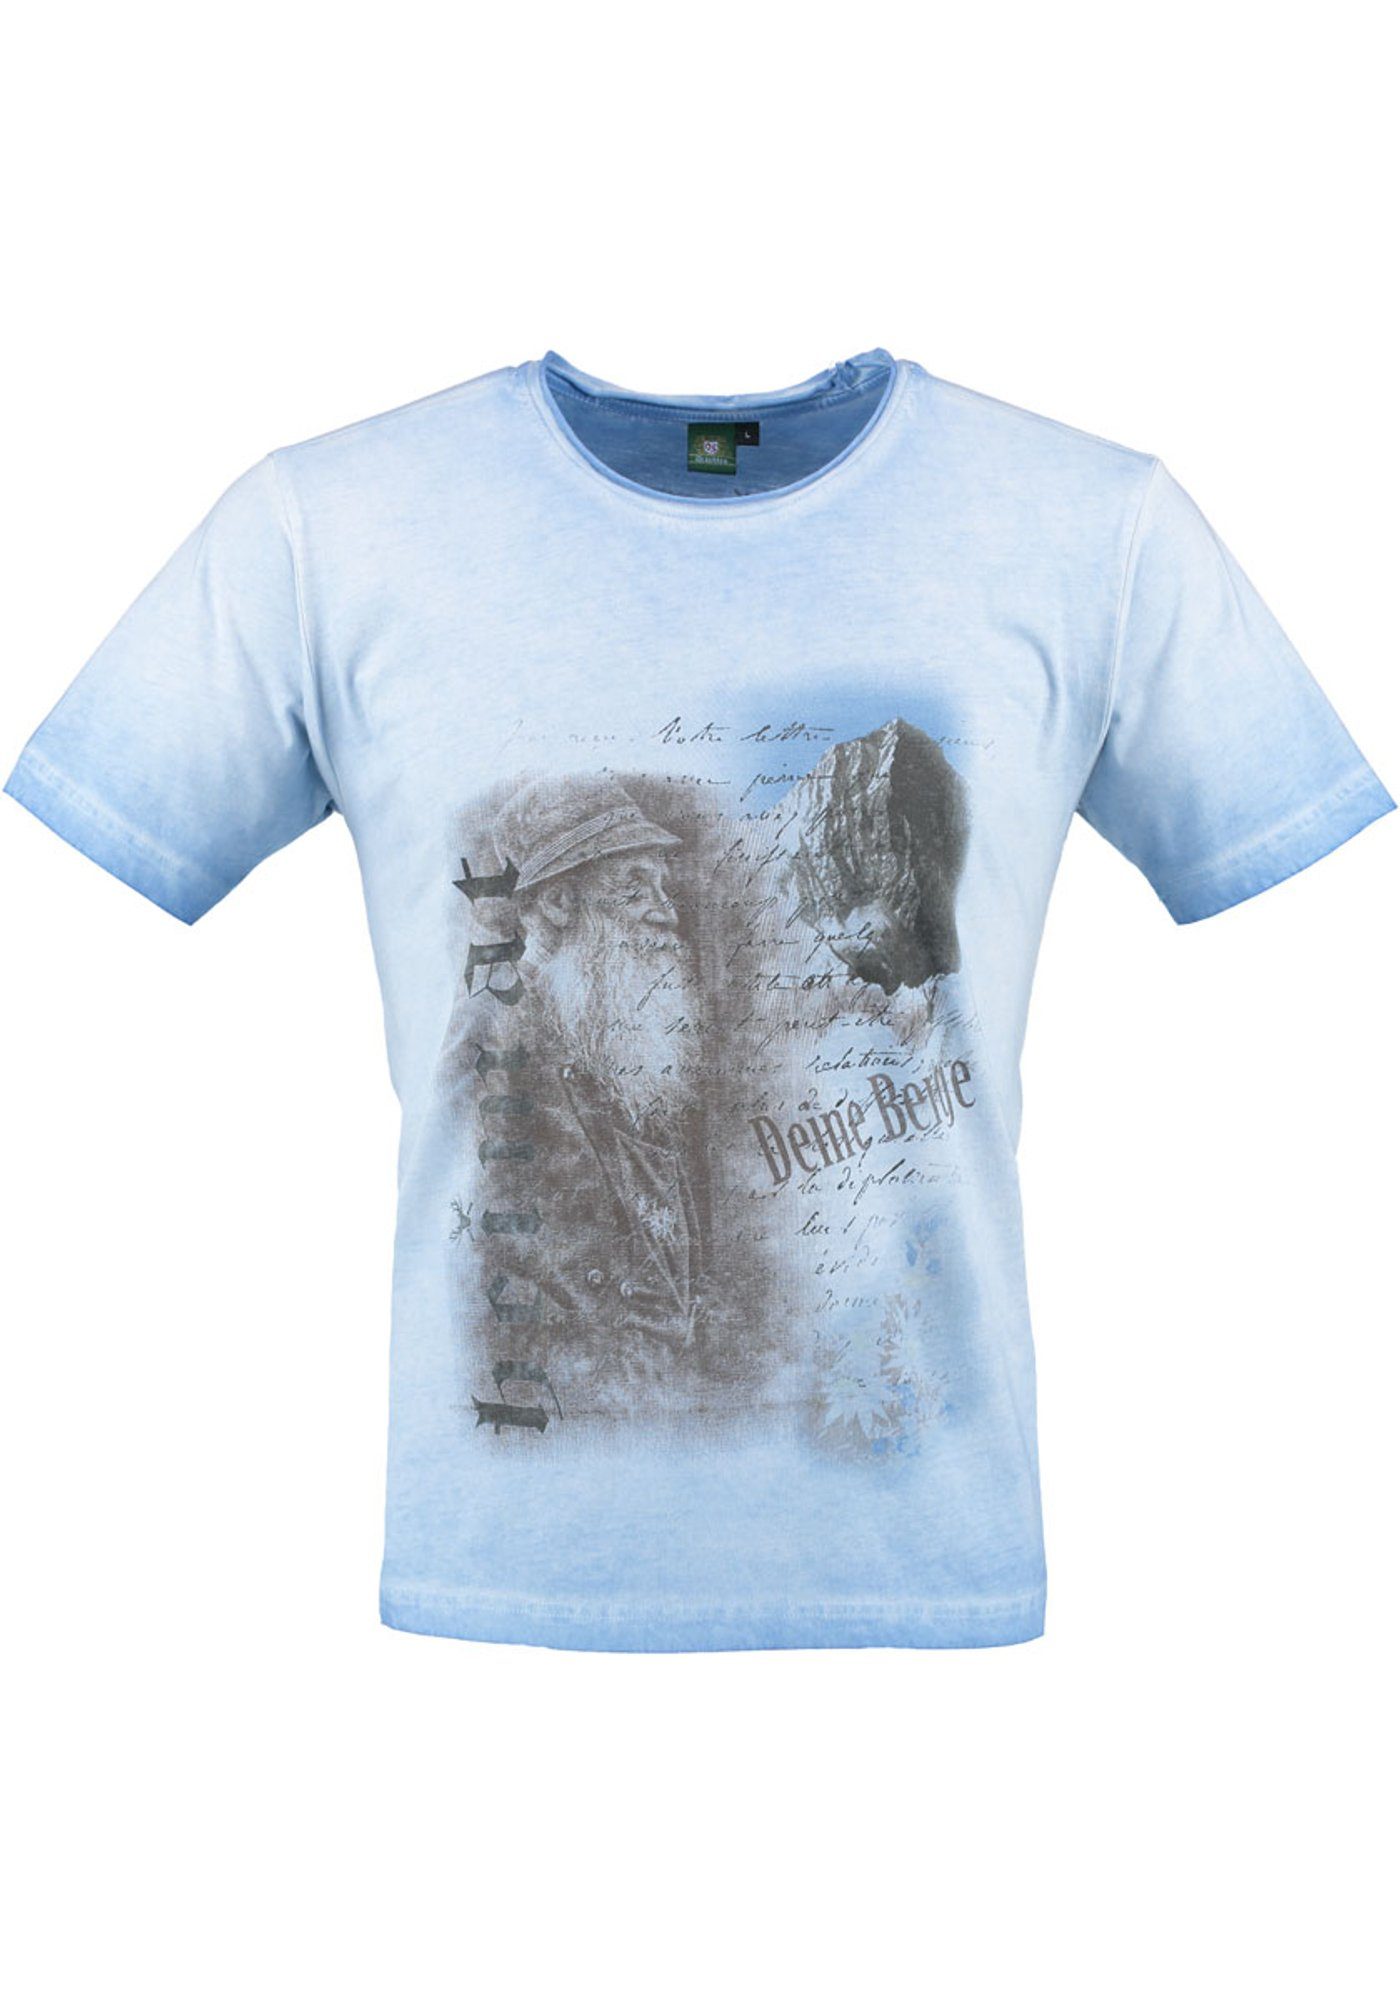 T-Shirt OS-Trachten Kurzarm Praiol Motivdruck kornblau mit Trachtenshirt